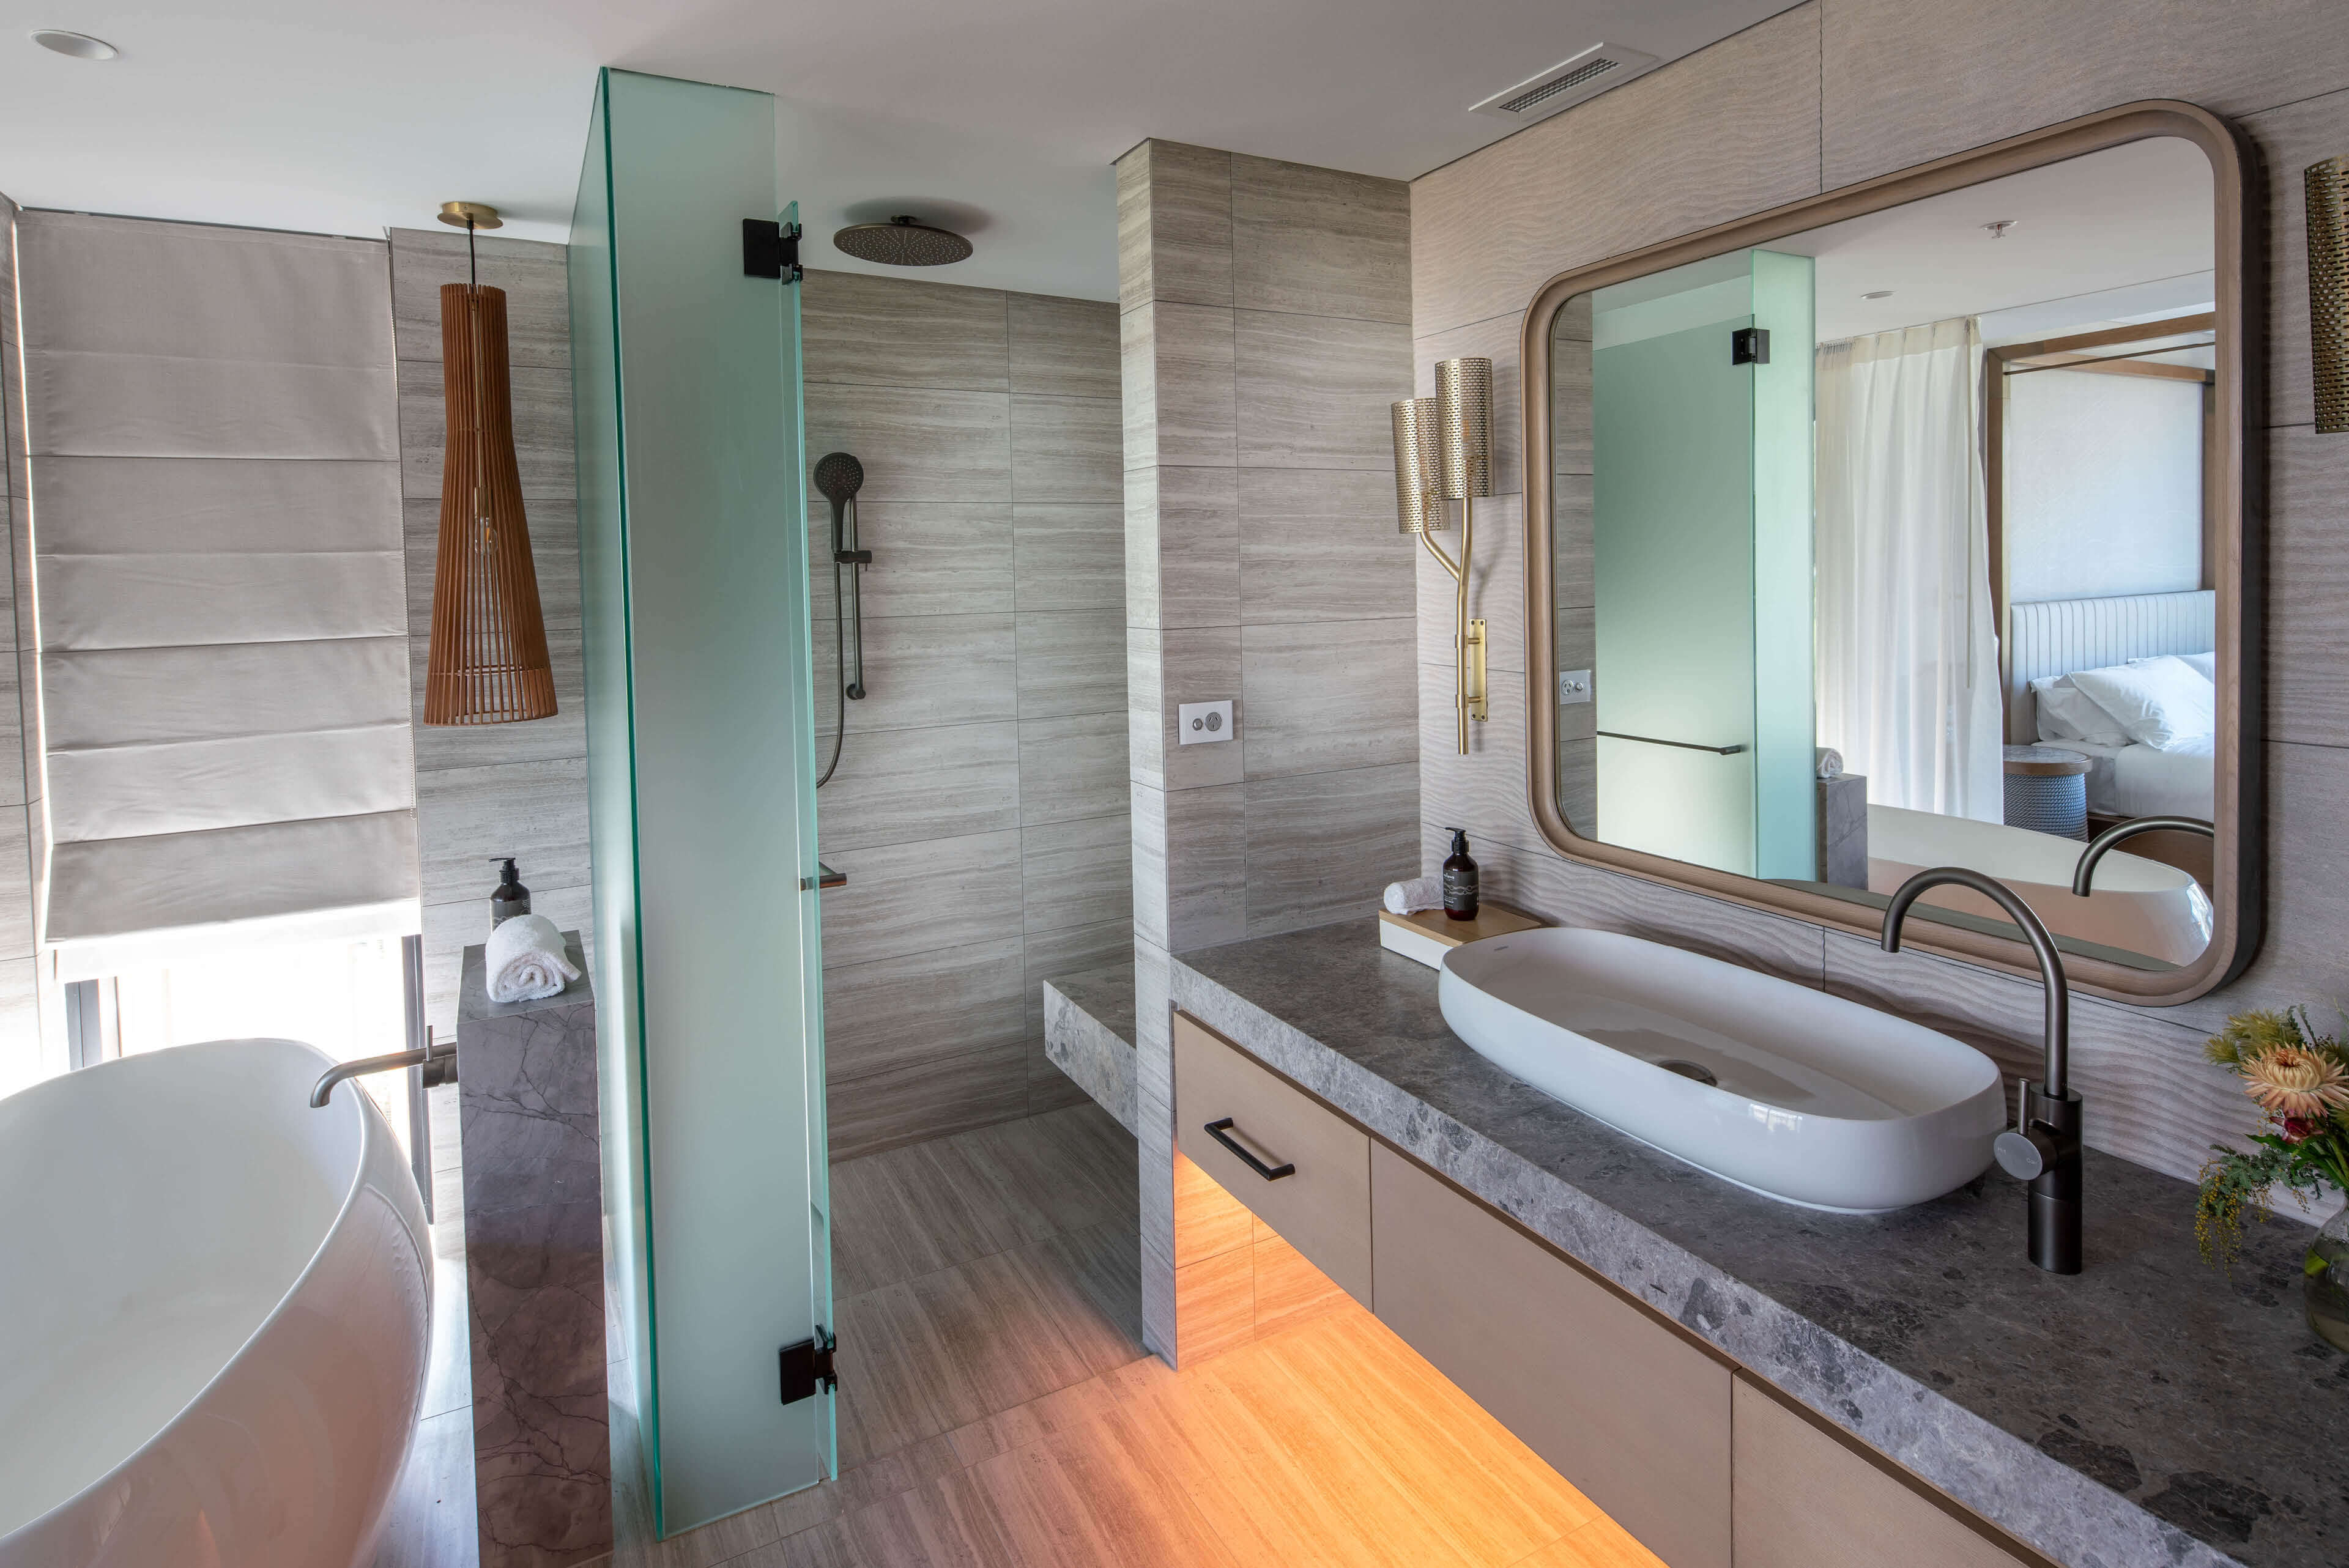 26 accommodation interior of bathroom and shower at taronga wildlife retreat sydney taylor construction hospitality